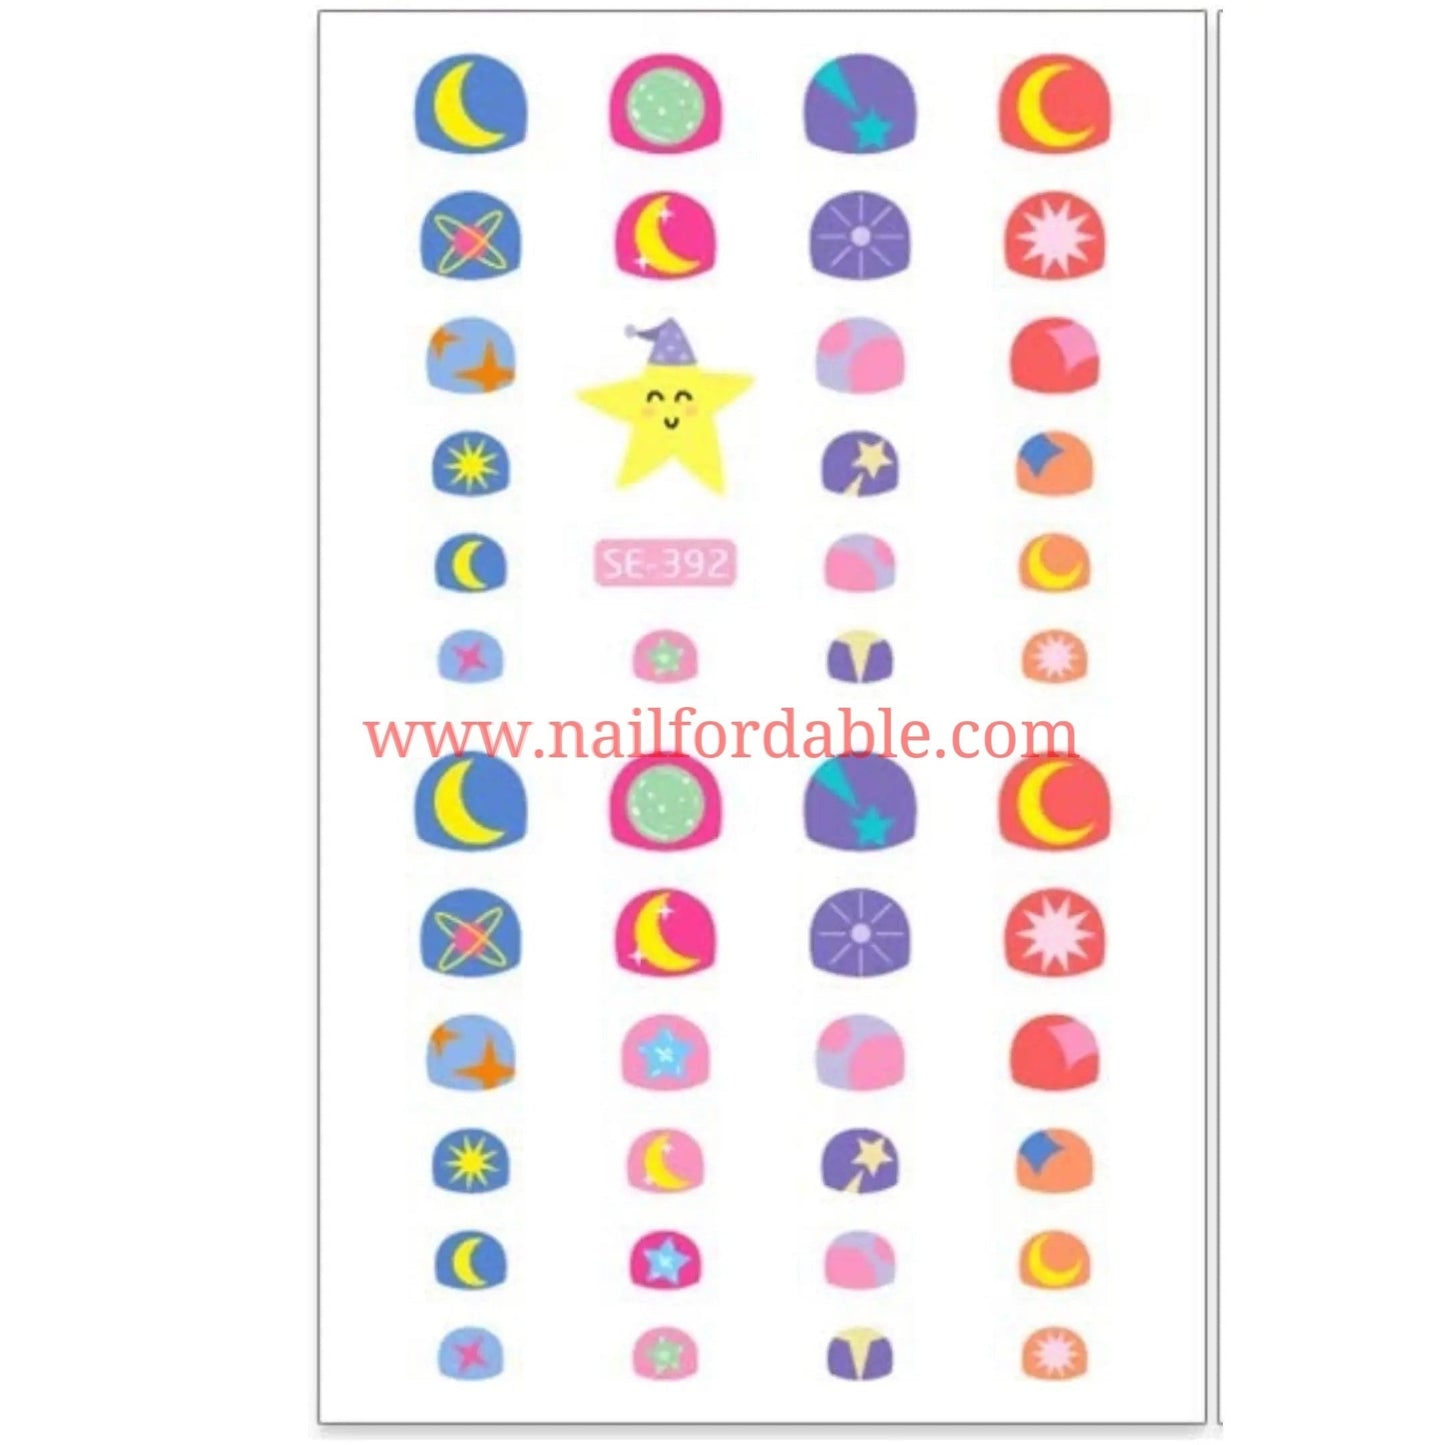 Moon and stars Nail Stickers Nail Wraps | Semi Cured Gel Wraps | Gel Nail Wraps |Nail Polish | Nail Stickers